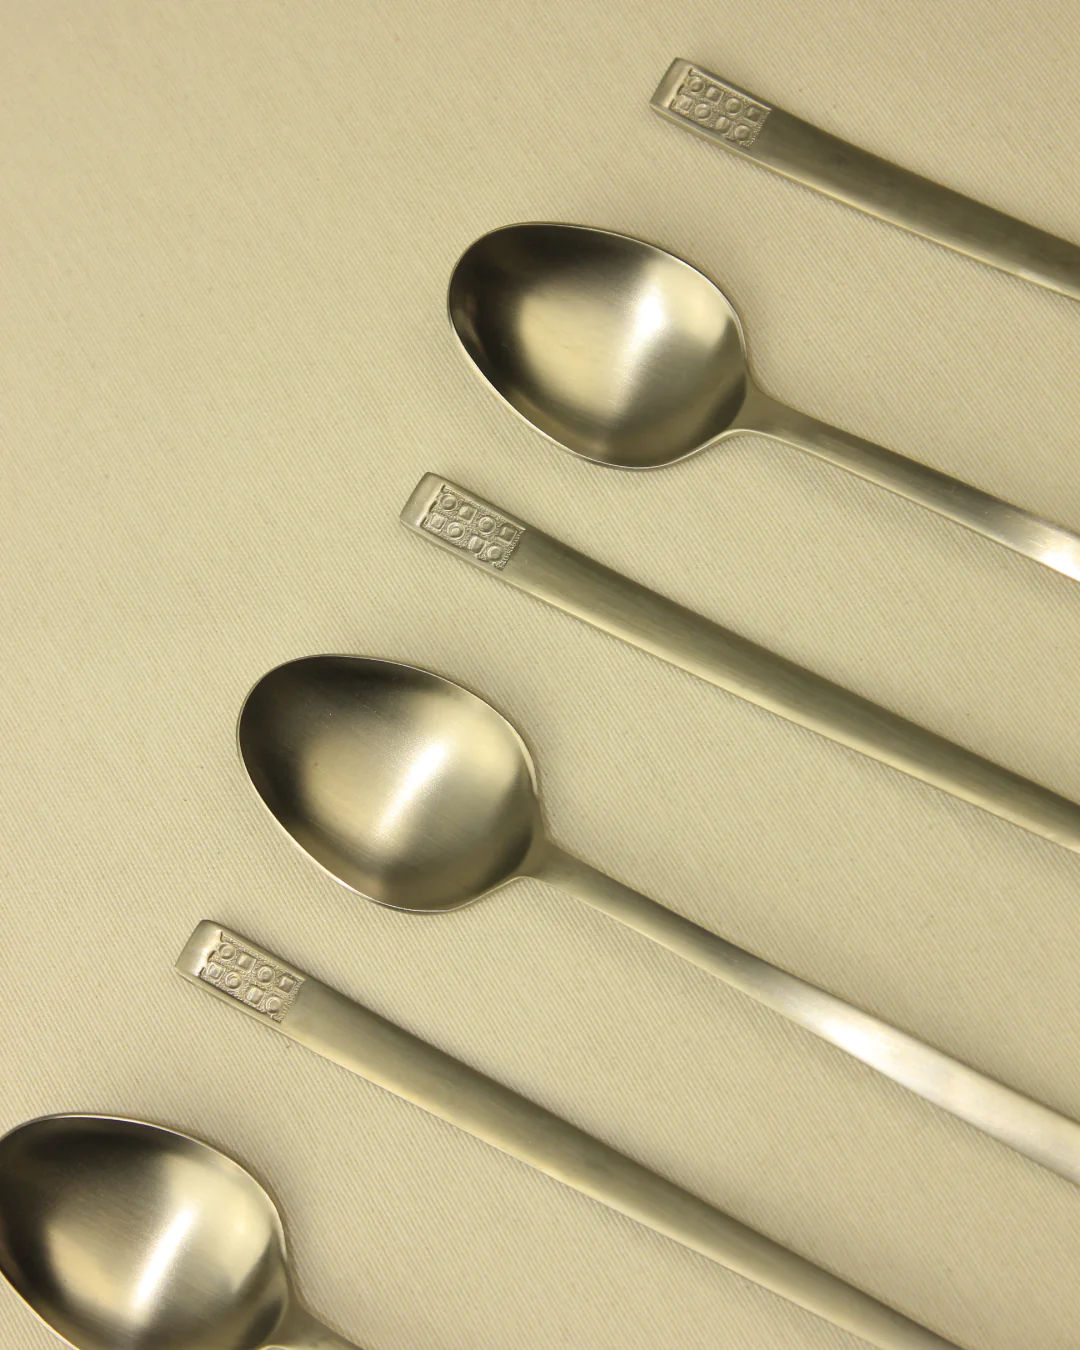 cutlery 70s Style Spoons Boga Avante Shop